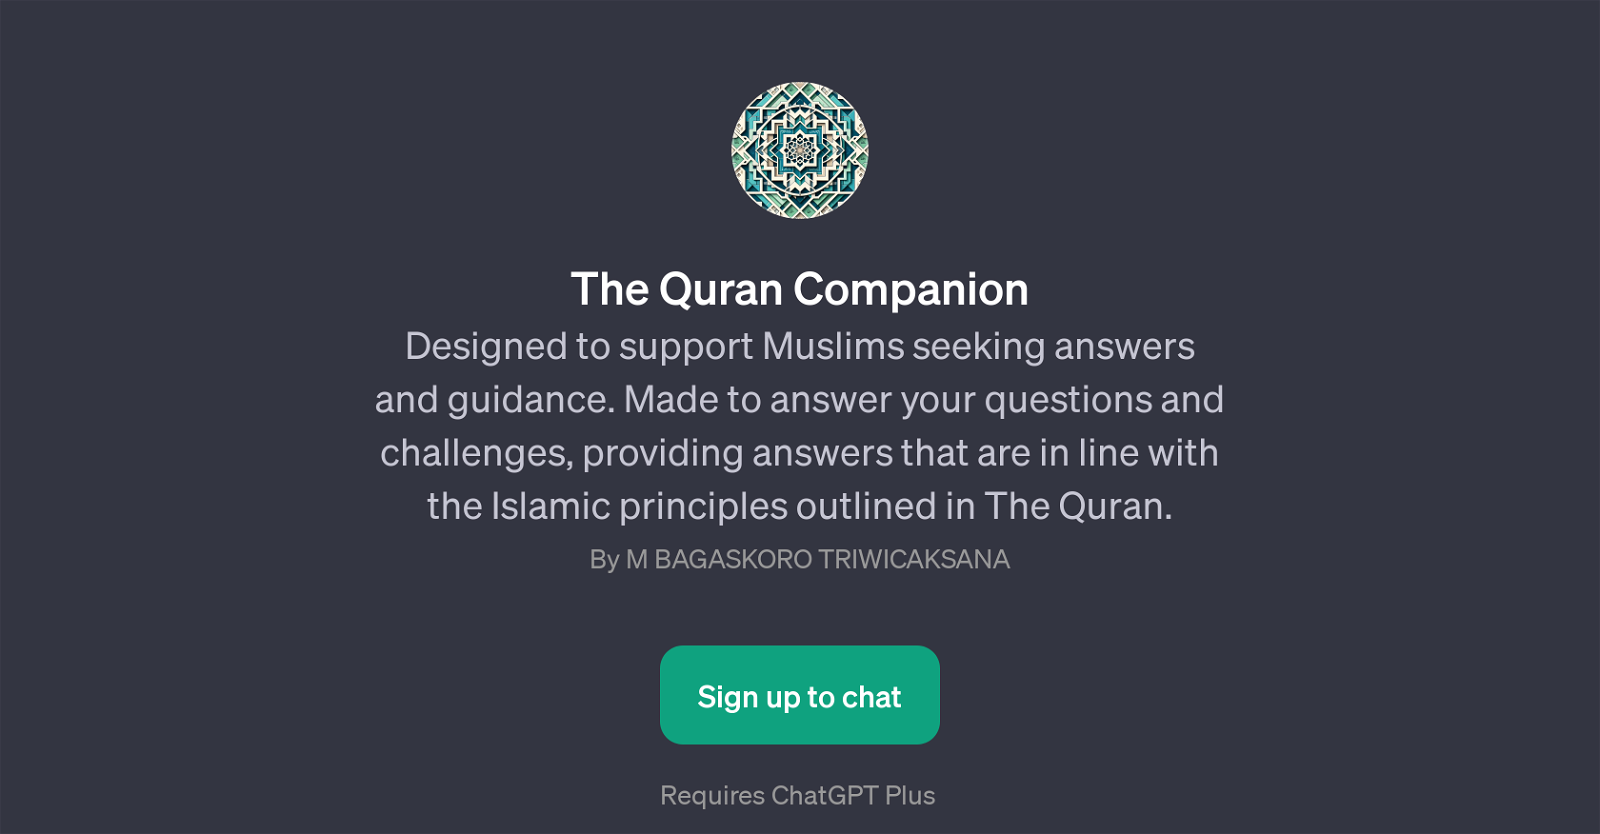 The Quran Companion website